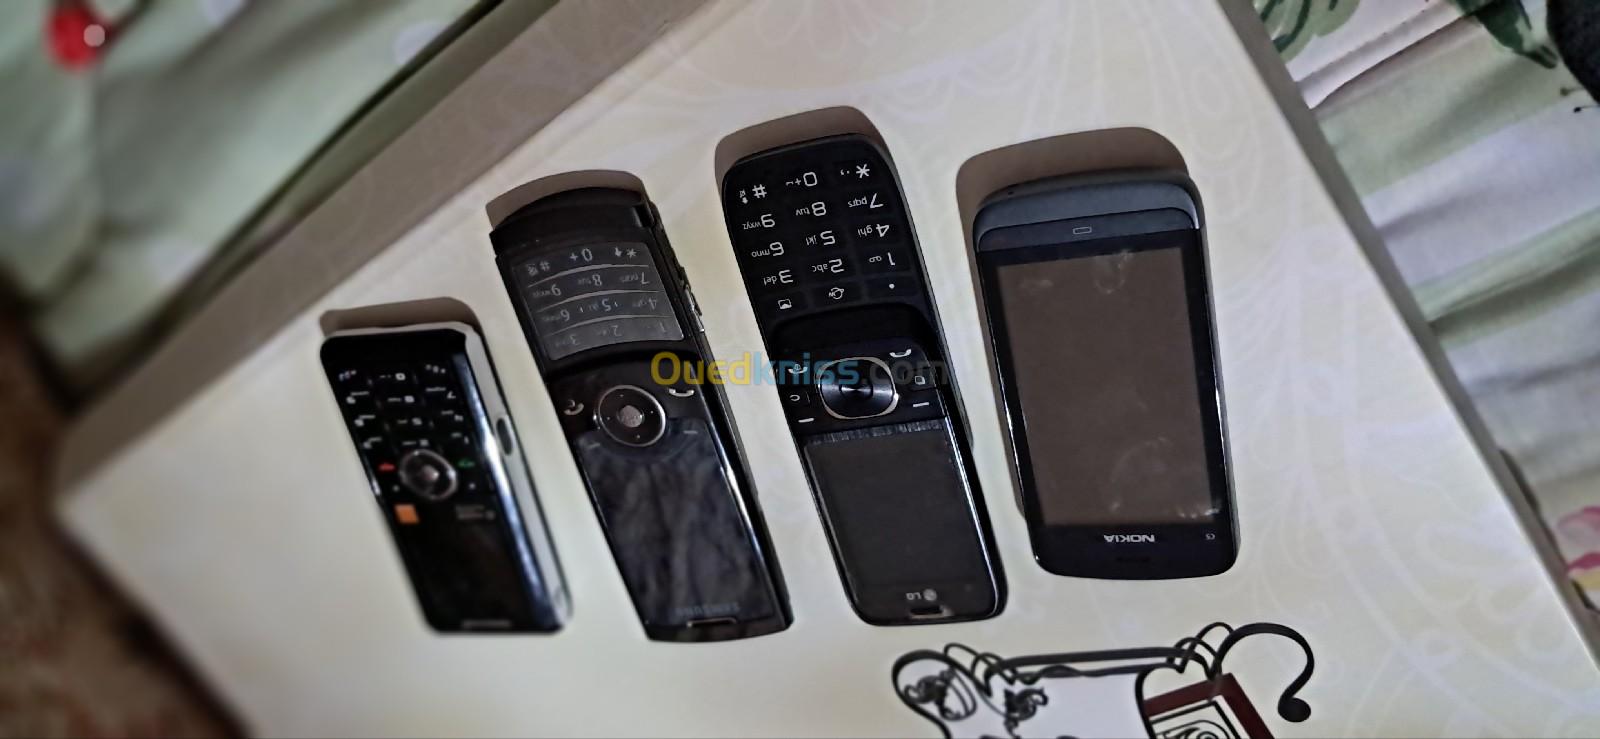 Samsung u600/ Nokia C5/ LG Gu280 Samsung noria LG